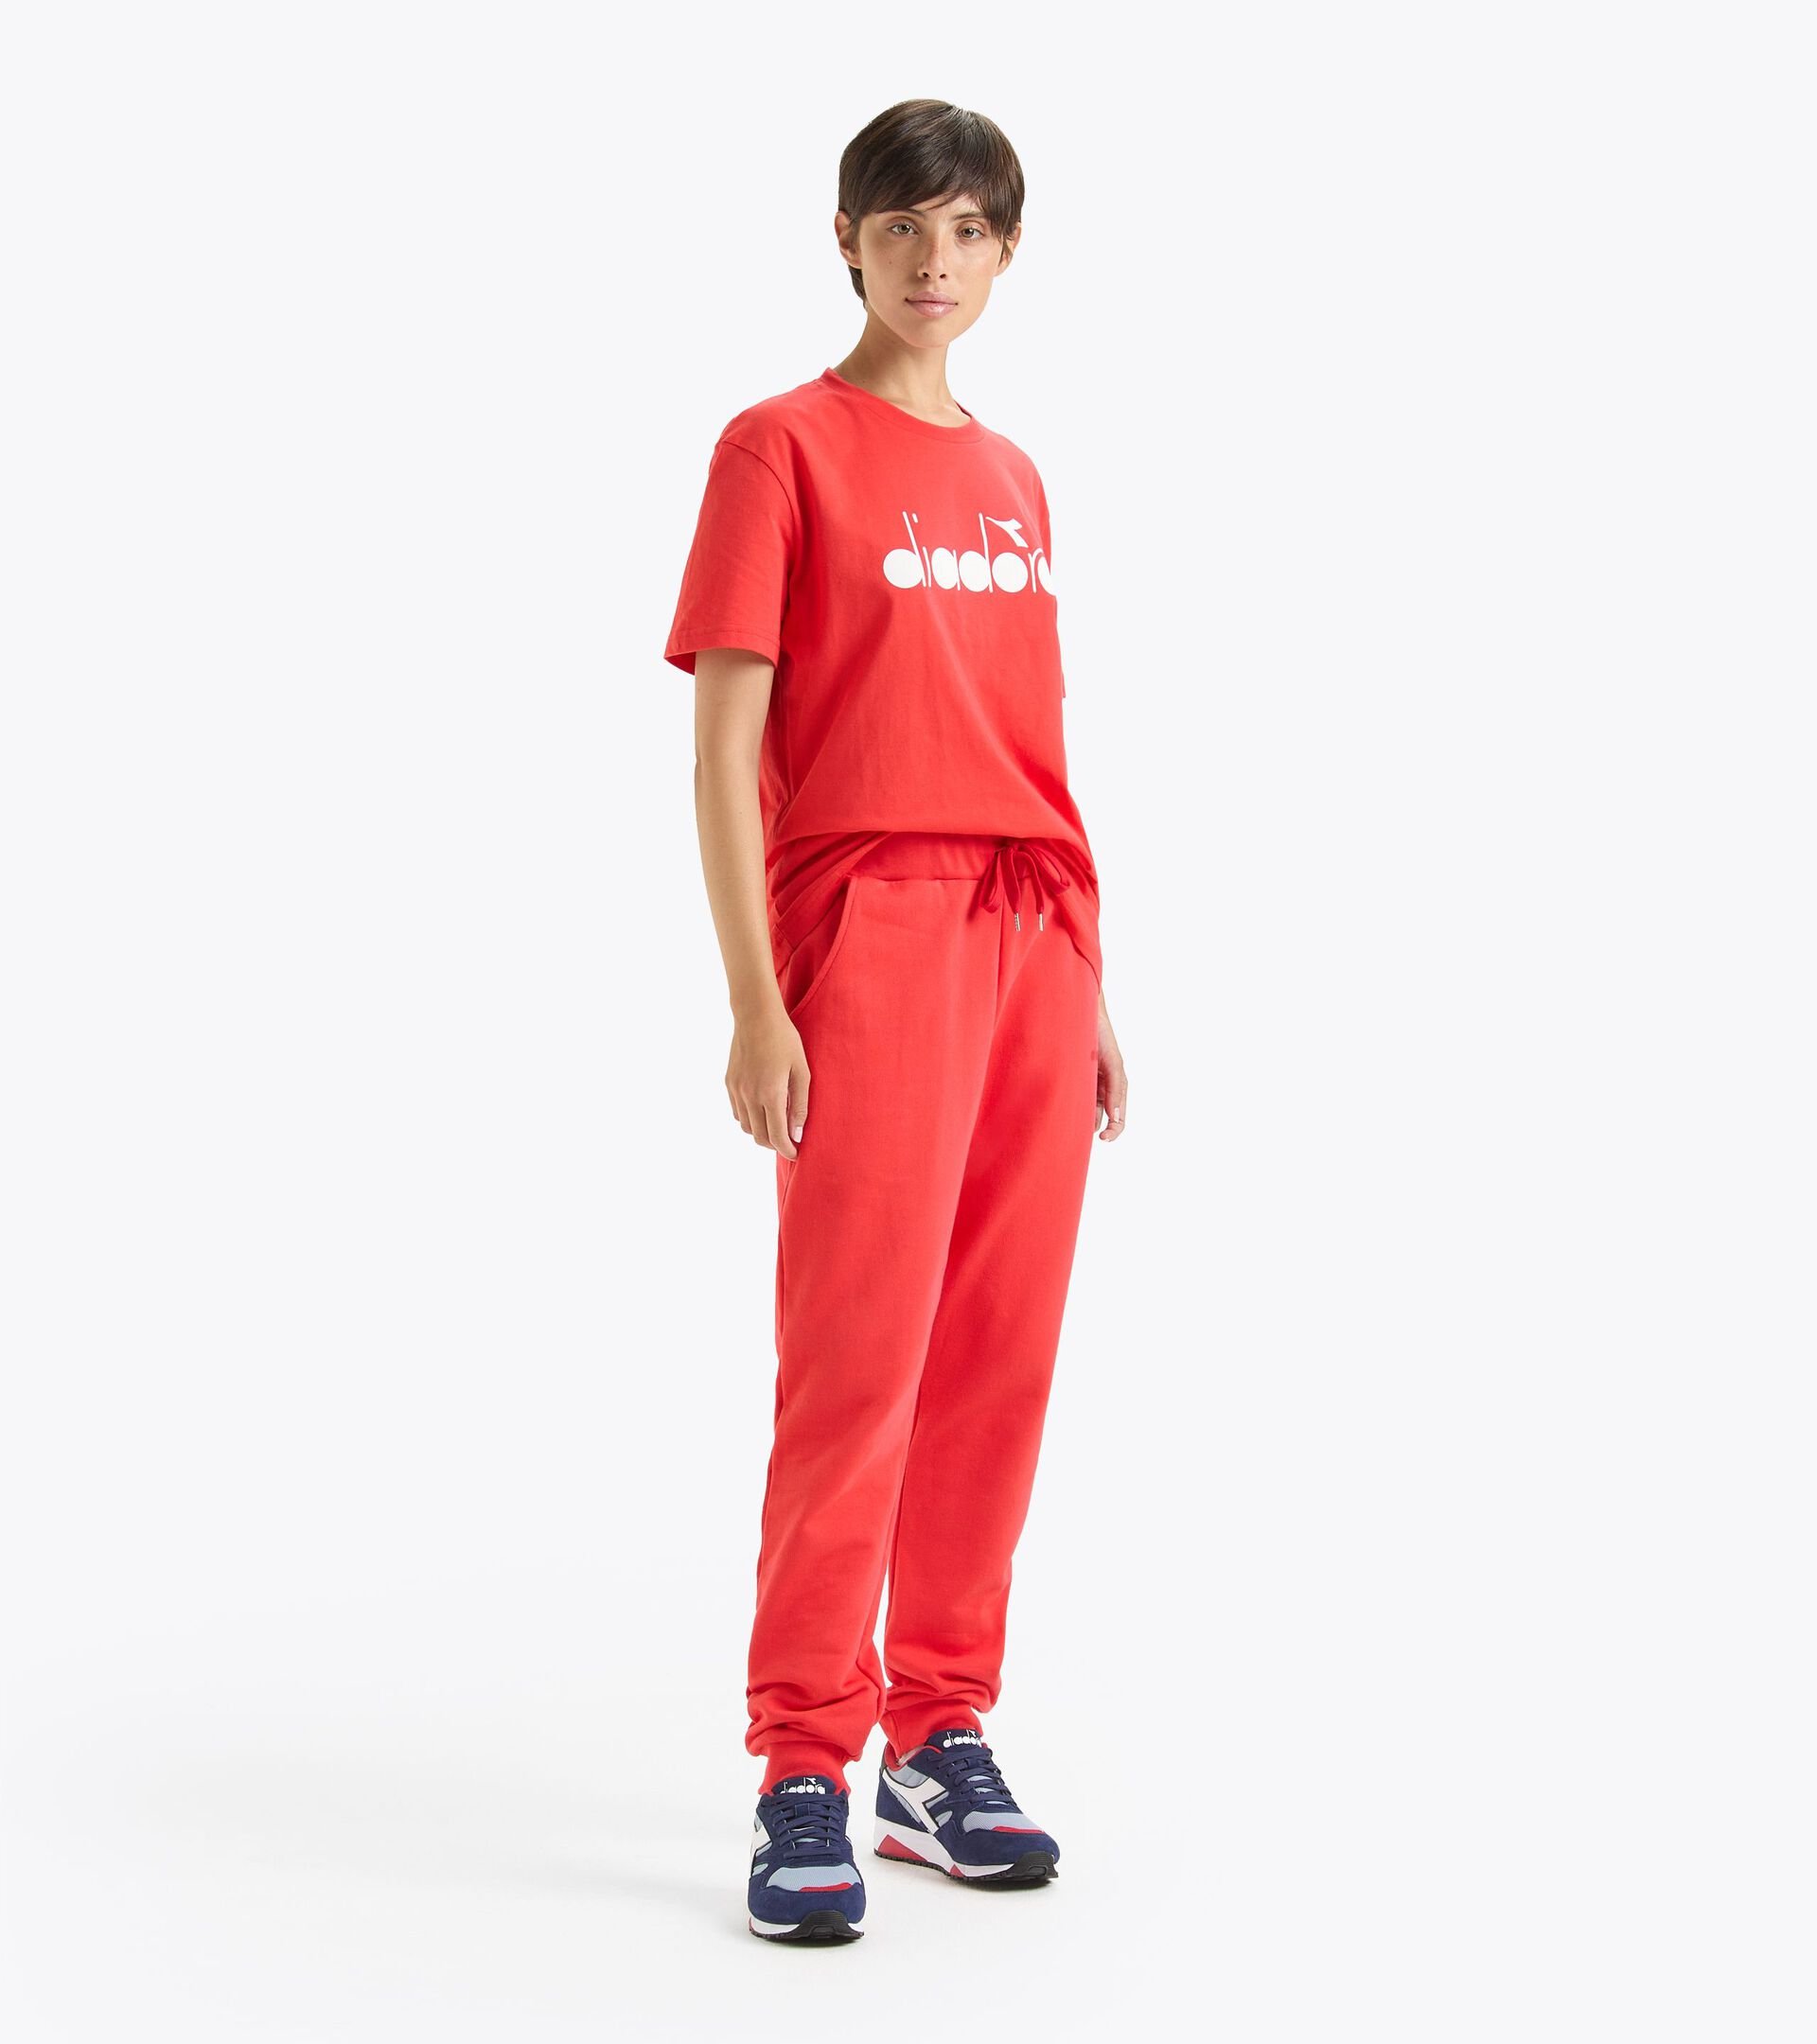 T-shirt - Made in Italy - Gender Neutral T-SHIRT SS LOGO BITTERSWEET RED - Diadora